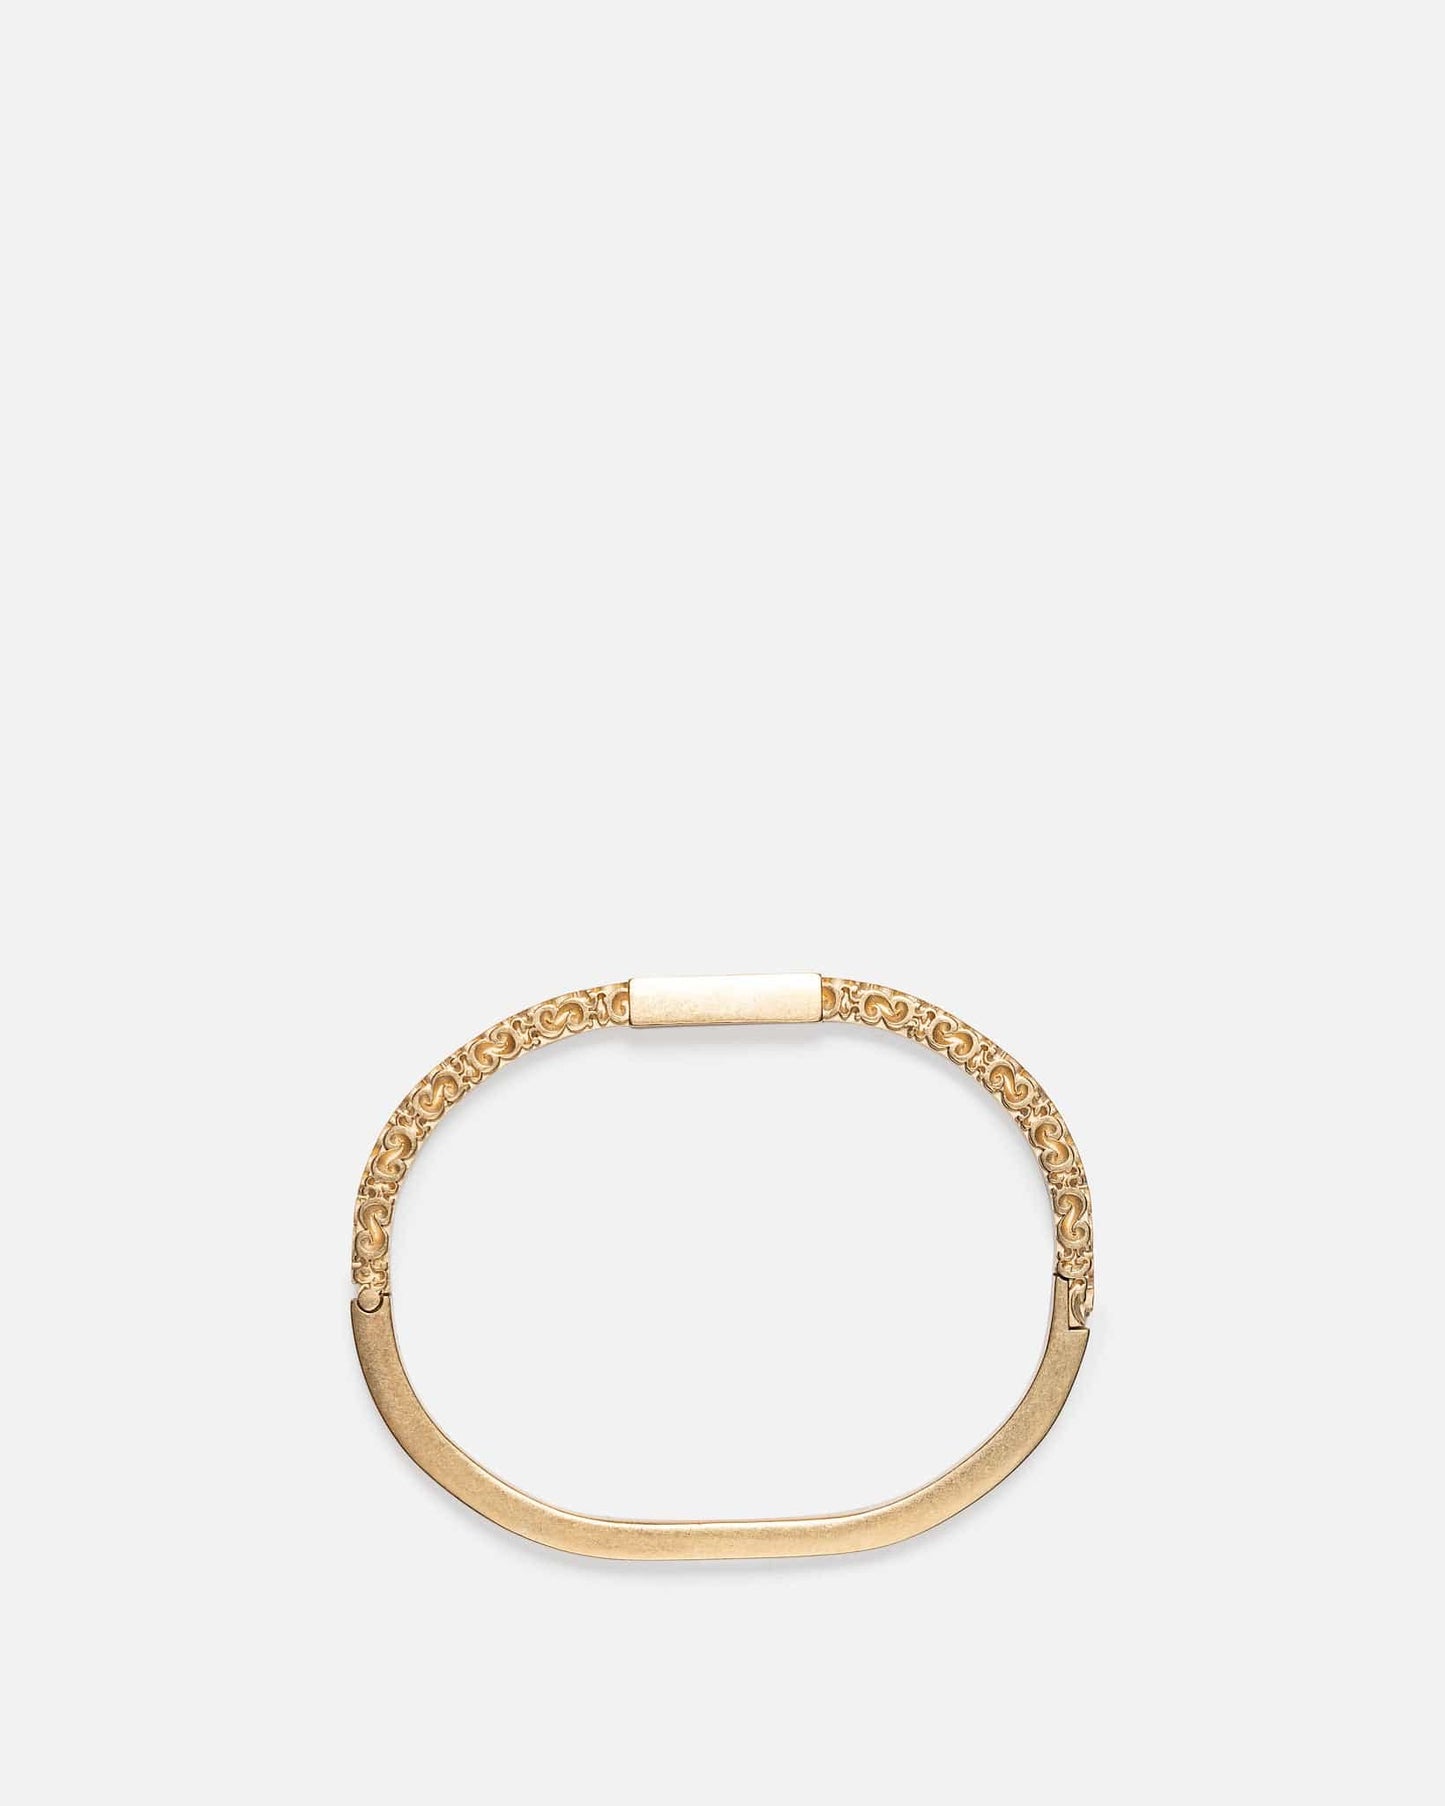 Maison Margiela Jewelry Engraved Bracelet in Gold